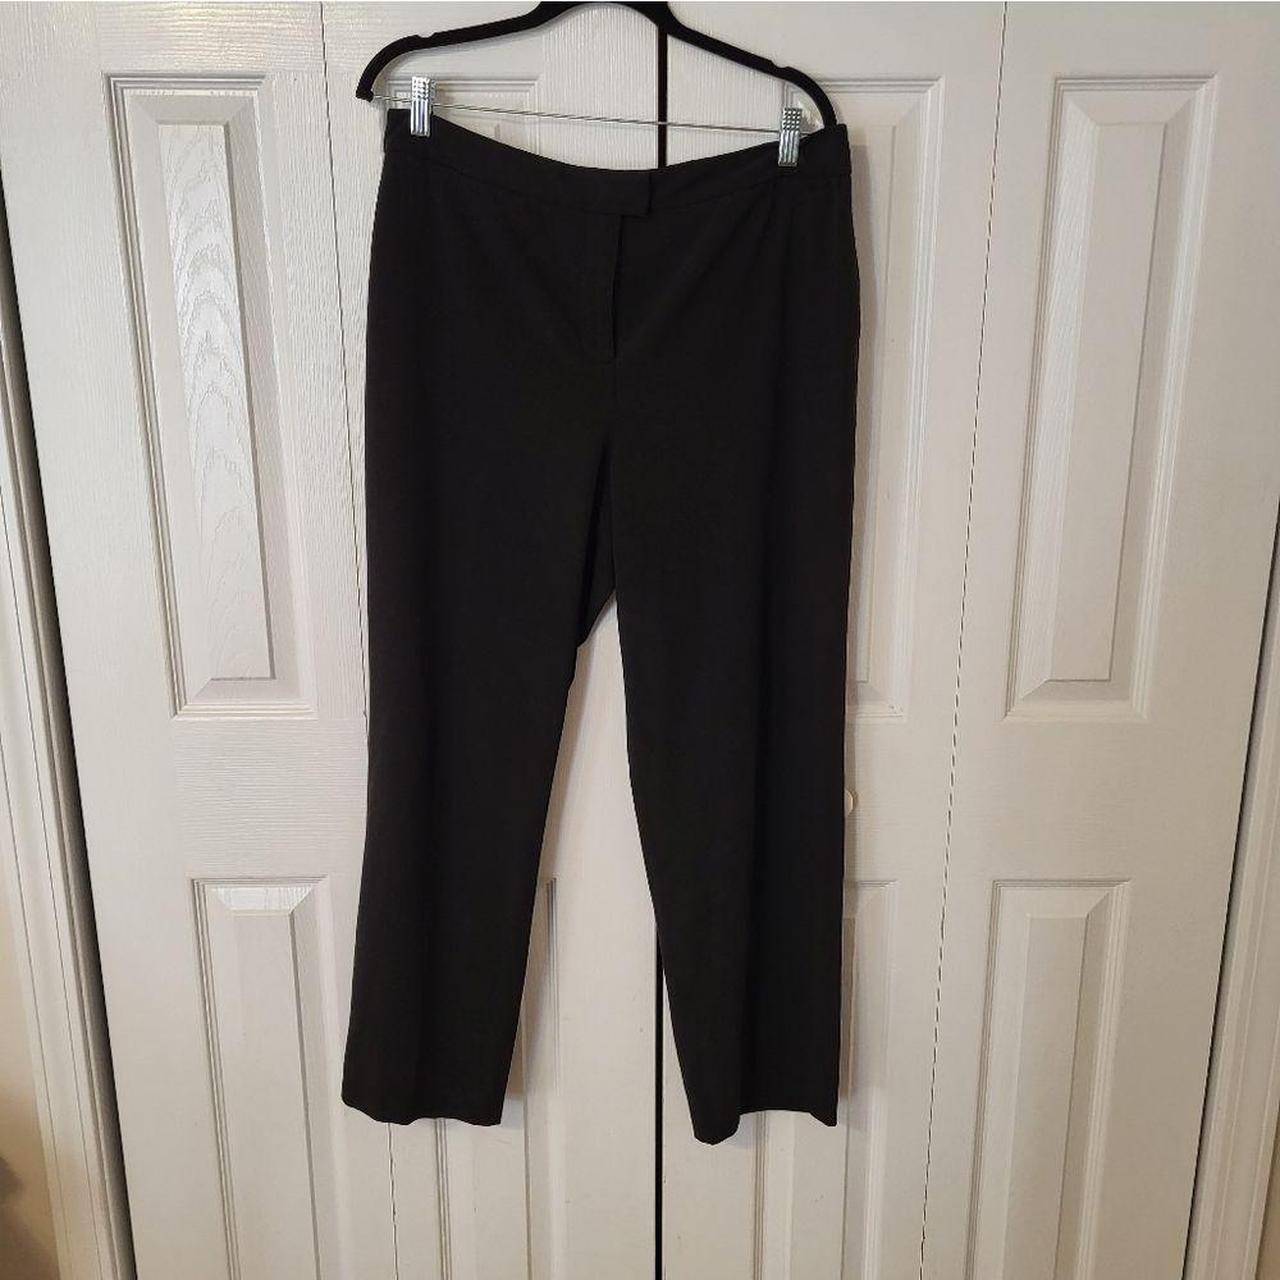 NWOT Talbots stretch black dress pants, size 14, no - Depop